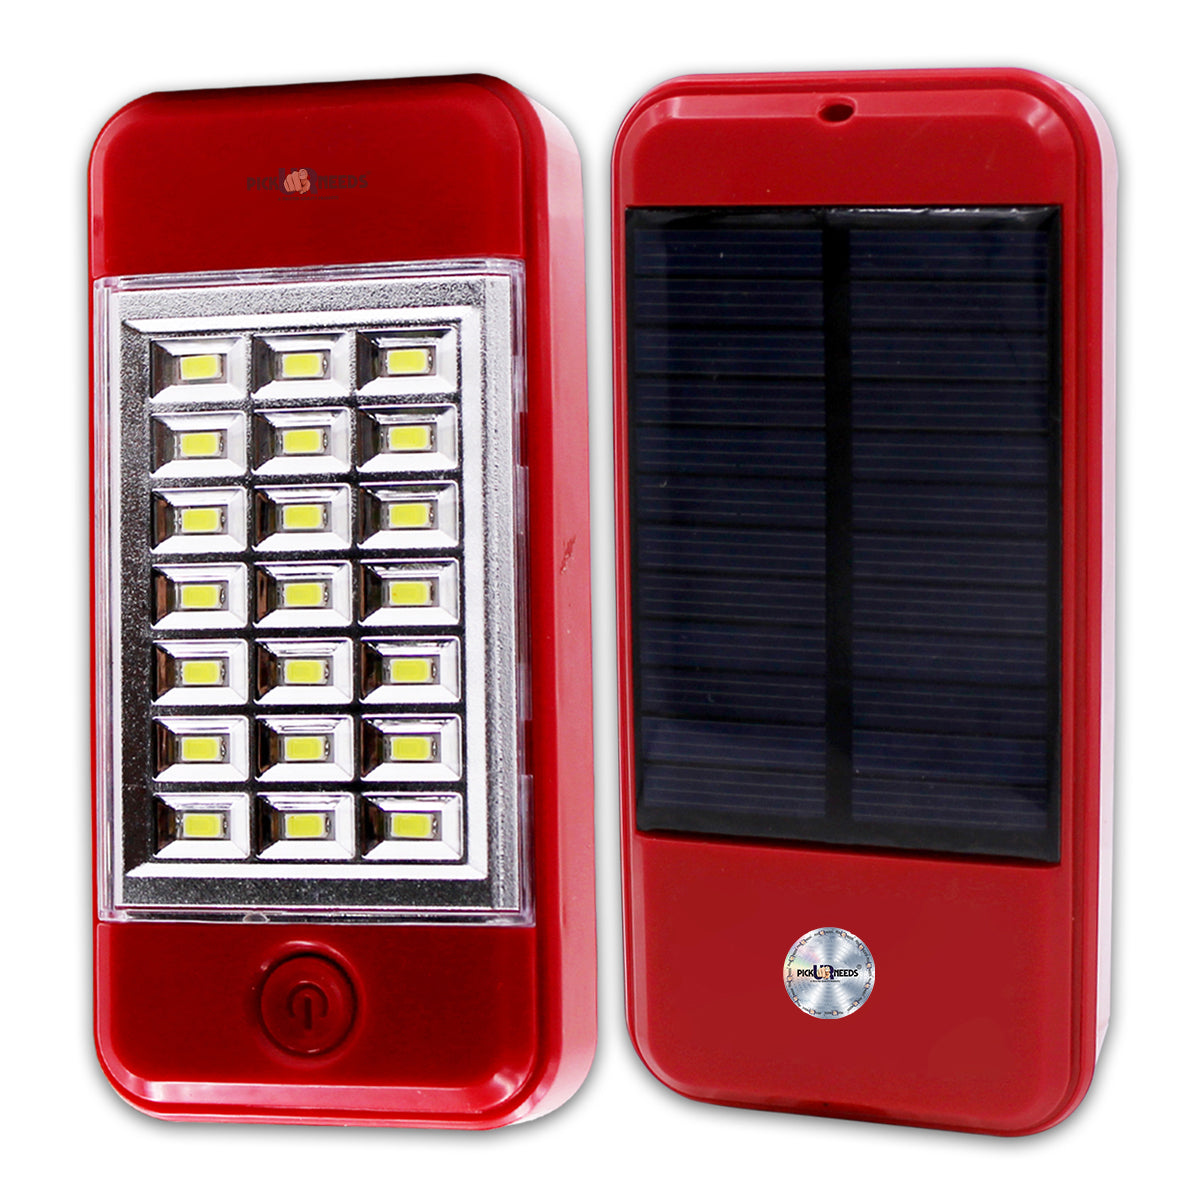 Pick Ur Needs Solar Power Bank Cum 21 Hi-Bright Led 6 hrs Lantern Emergency Light